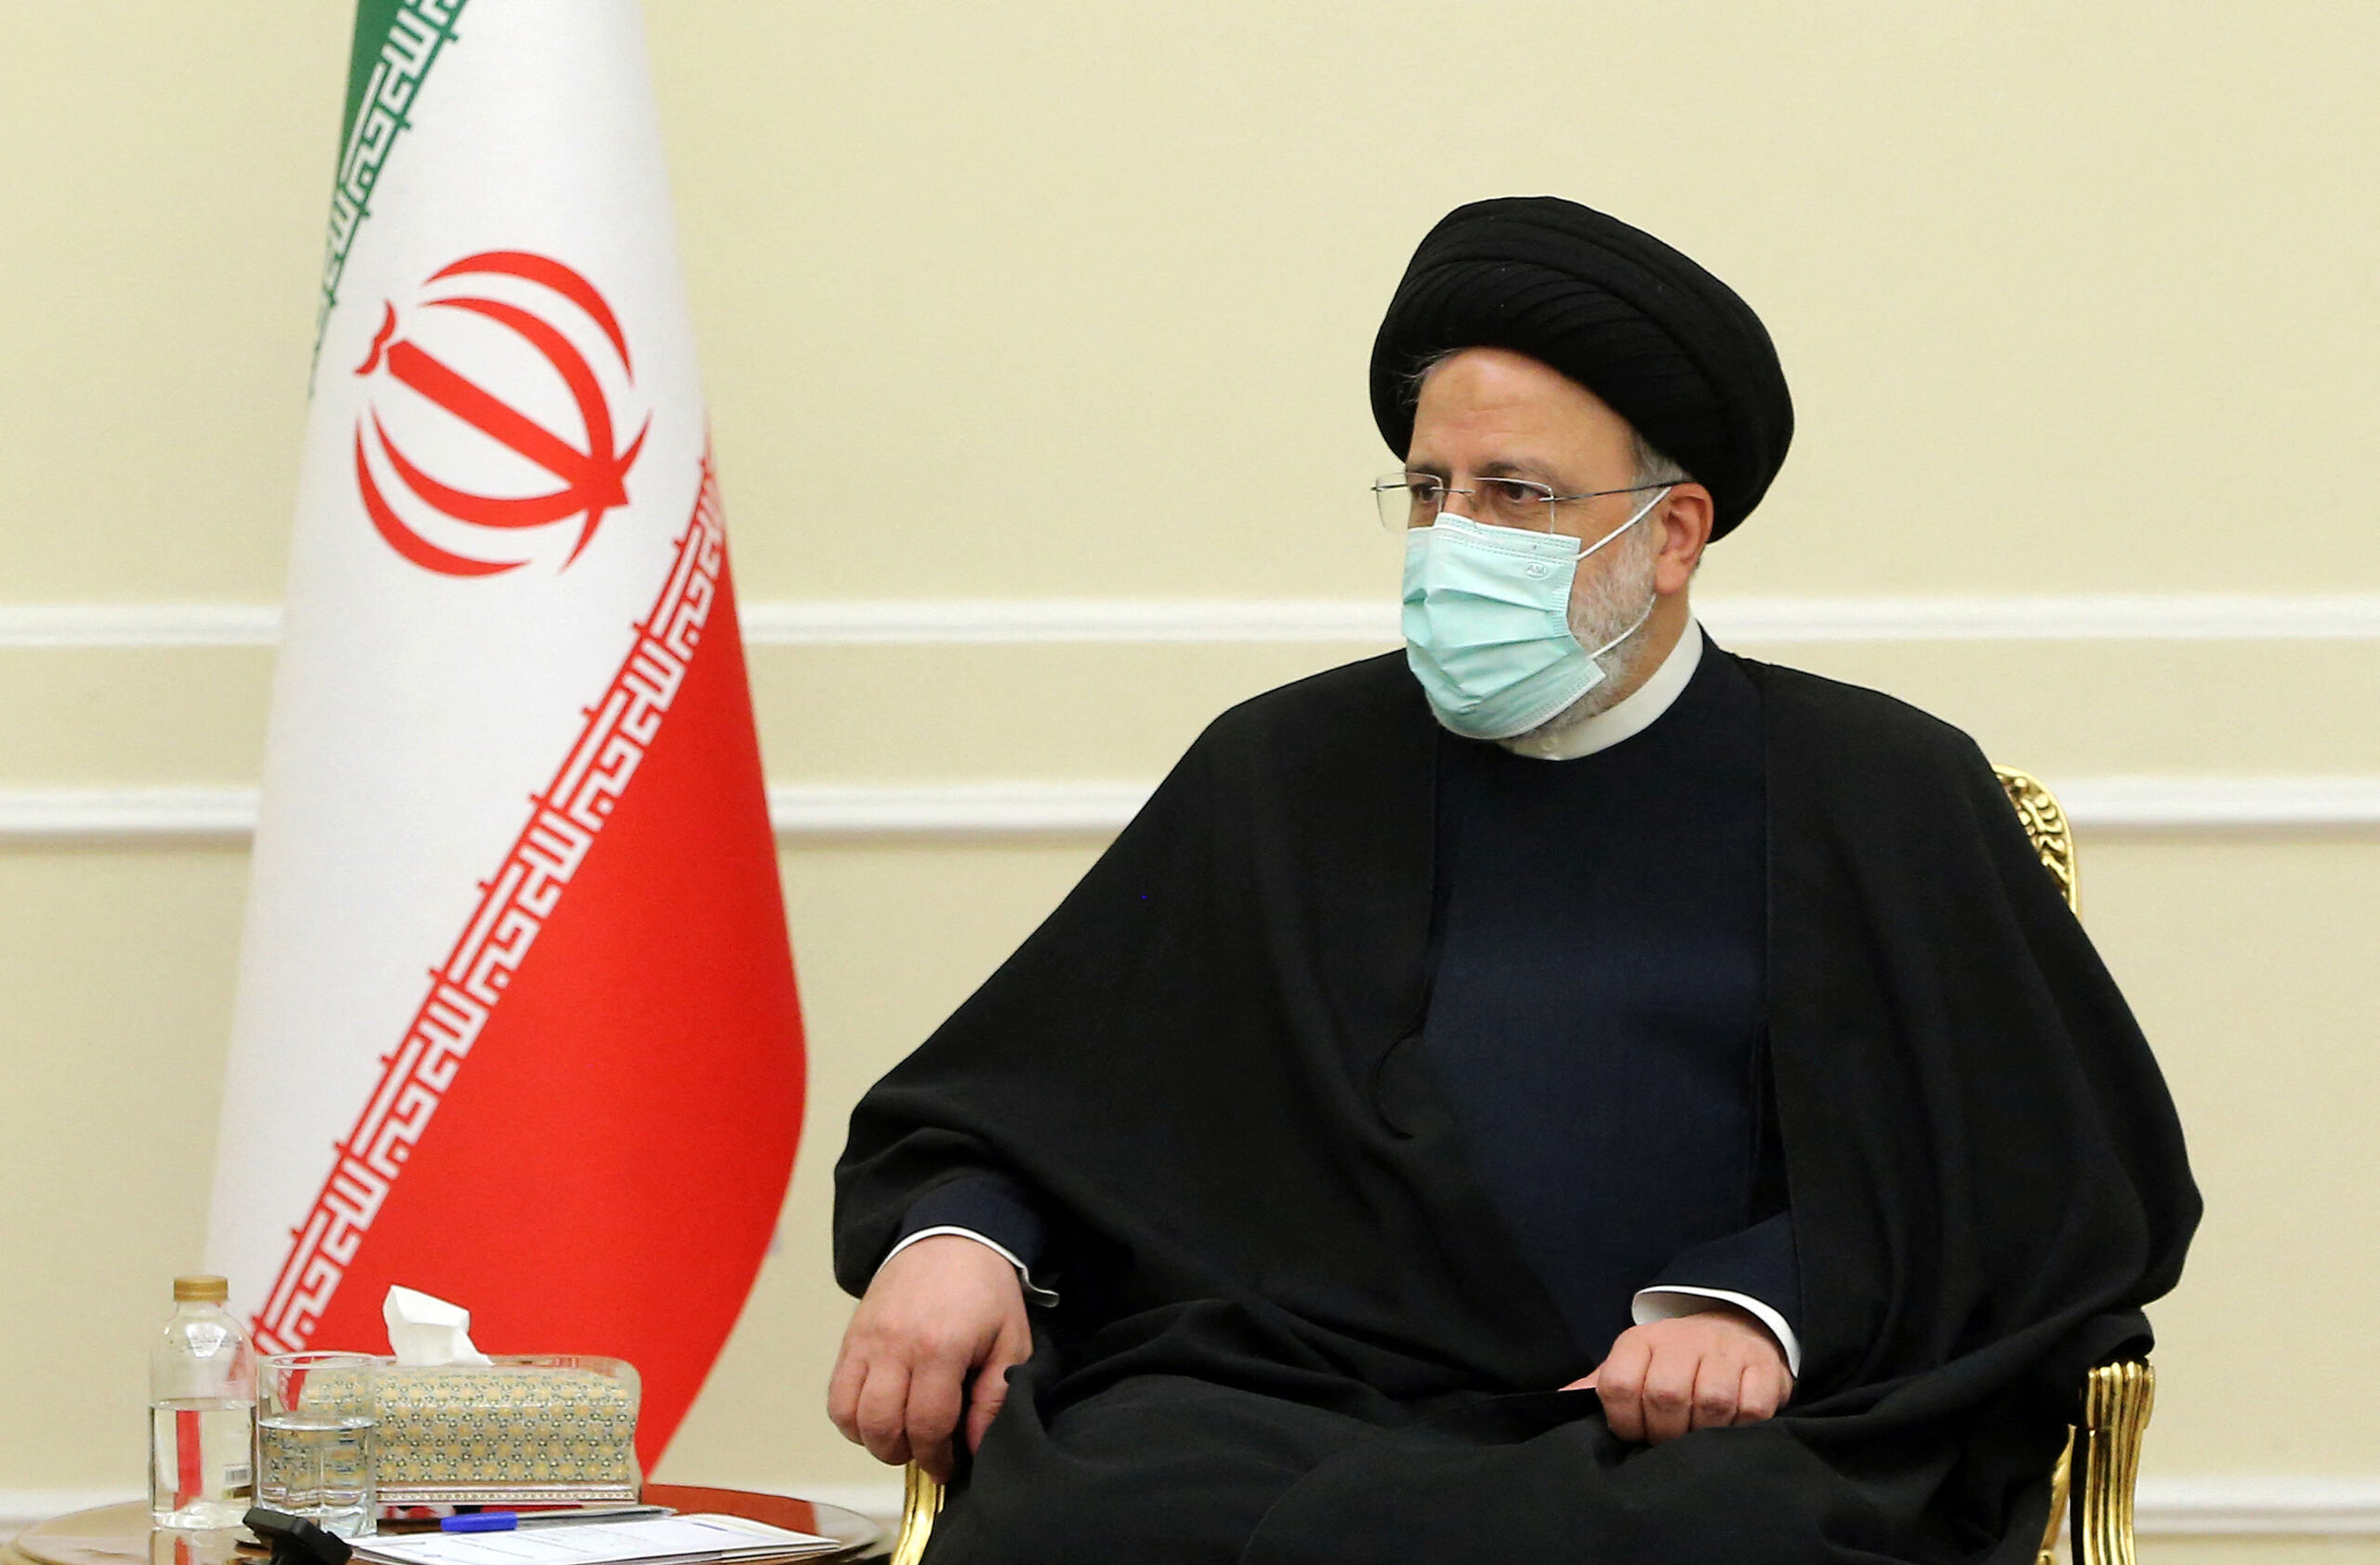 De Iraanse president Ebrahim Raisi